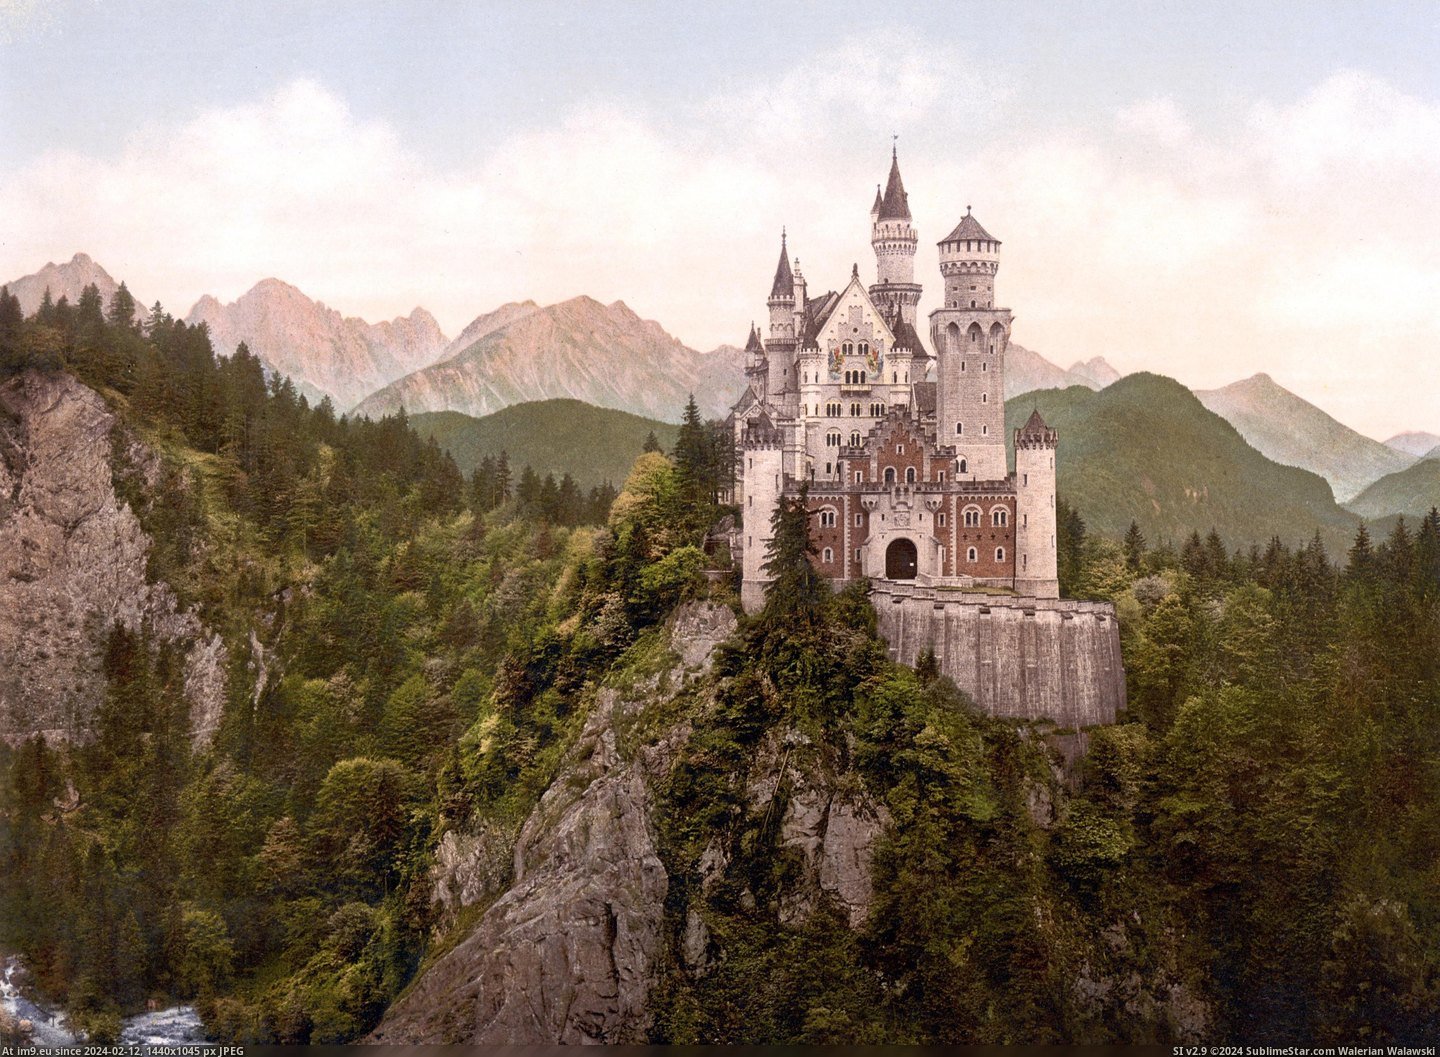 #Castle #Neuschwanstein #Loc #Print #Rotated Neuschwanstein Castle Loc Print Rotated Pic. (Изображение из альбом Schloss Neuschwanstein (Neuschwanstein Castle)))